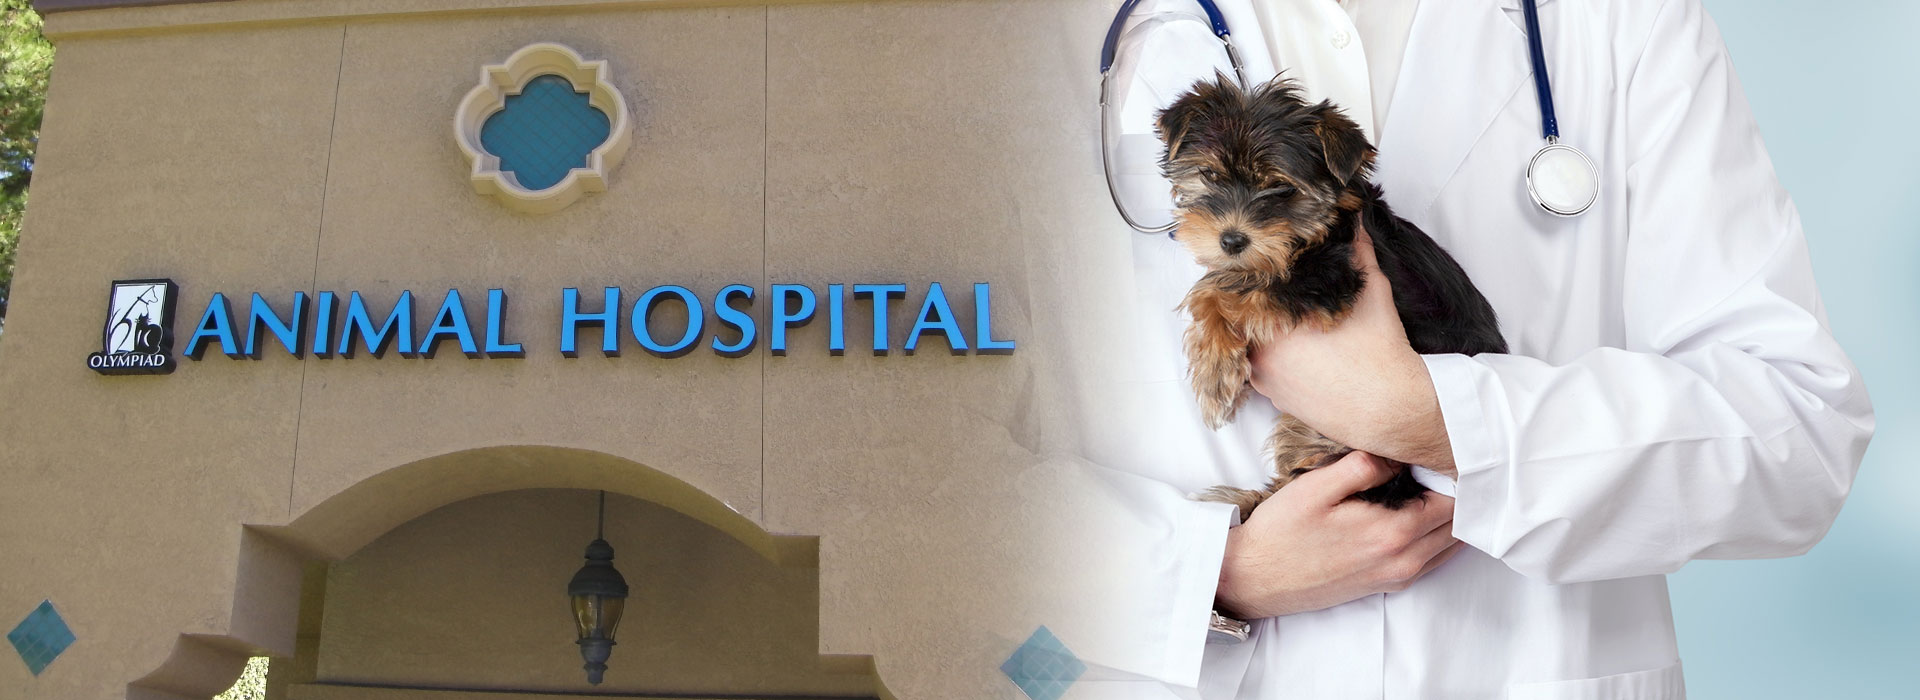 Mission Viejo Animal Hospital | Olympiad Animal Hospital & Vet Services